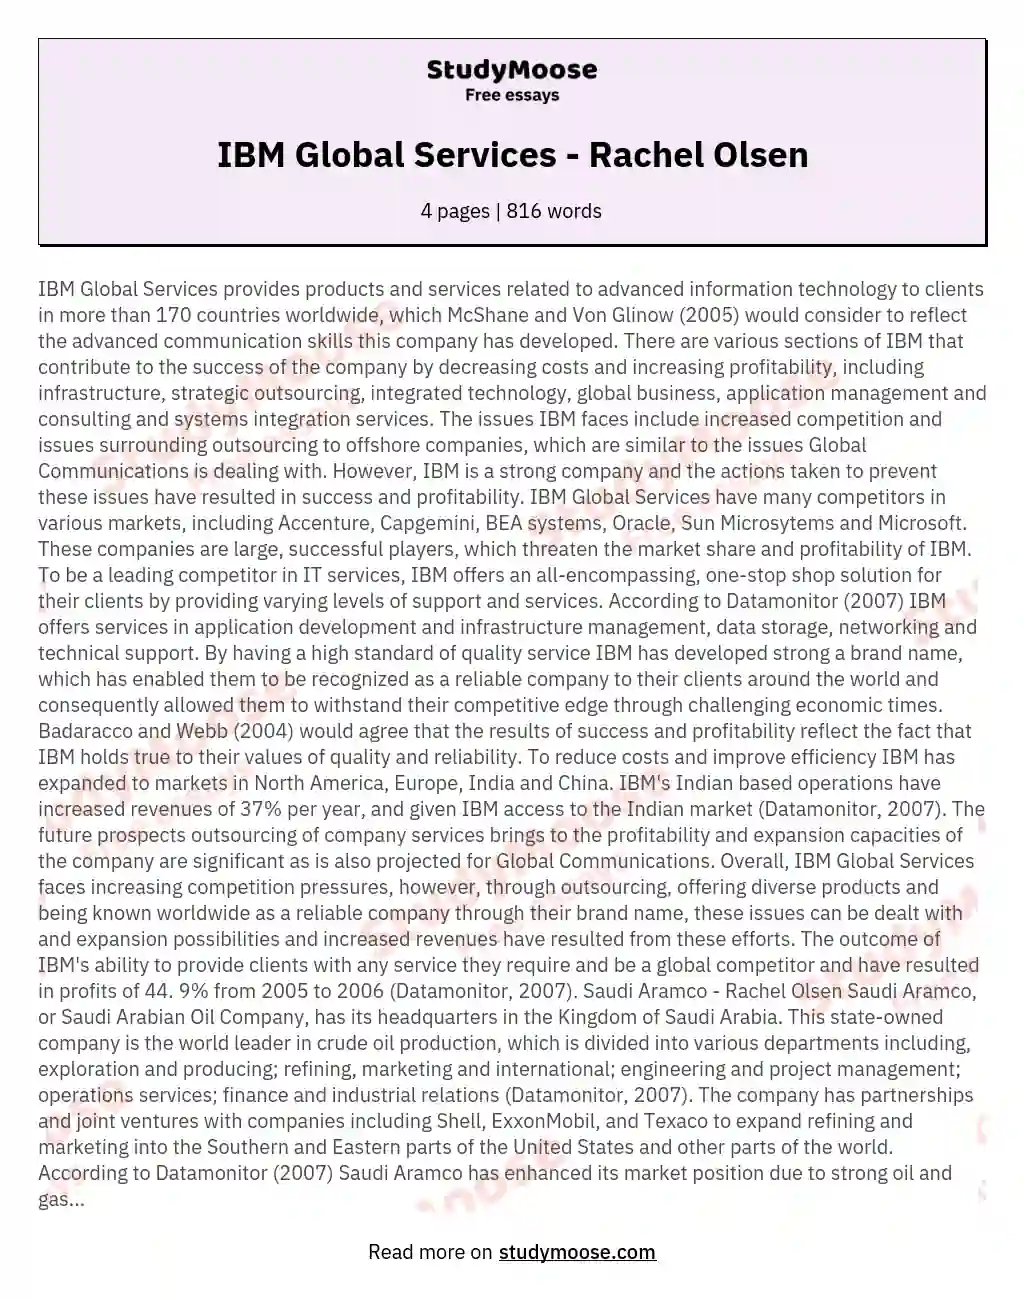 IBM Global Services - Rachel Olsen essay